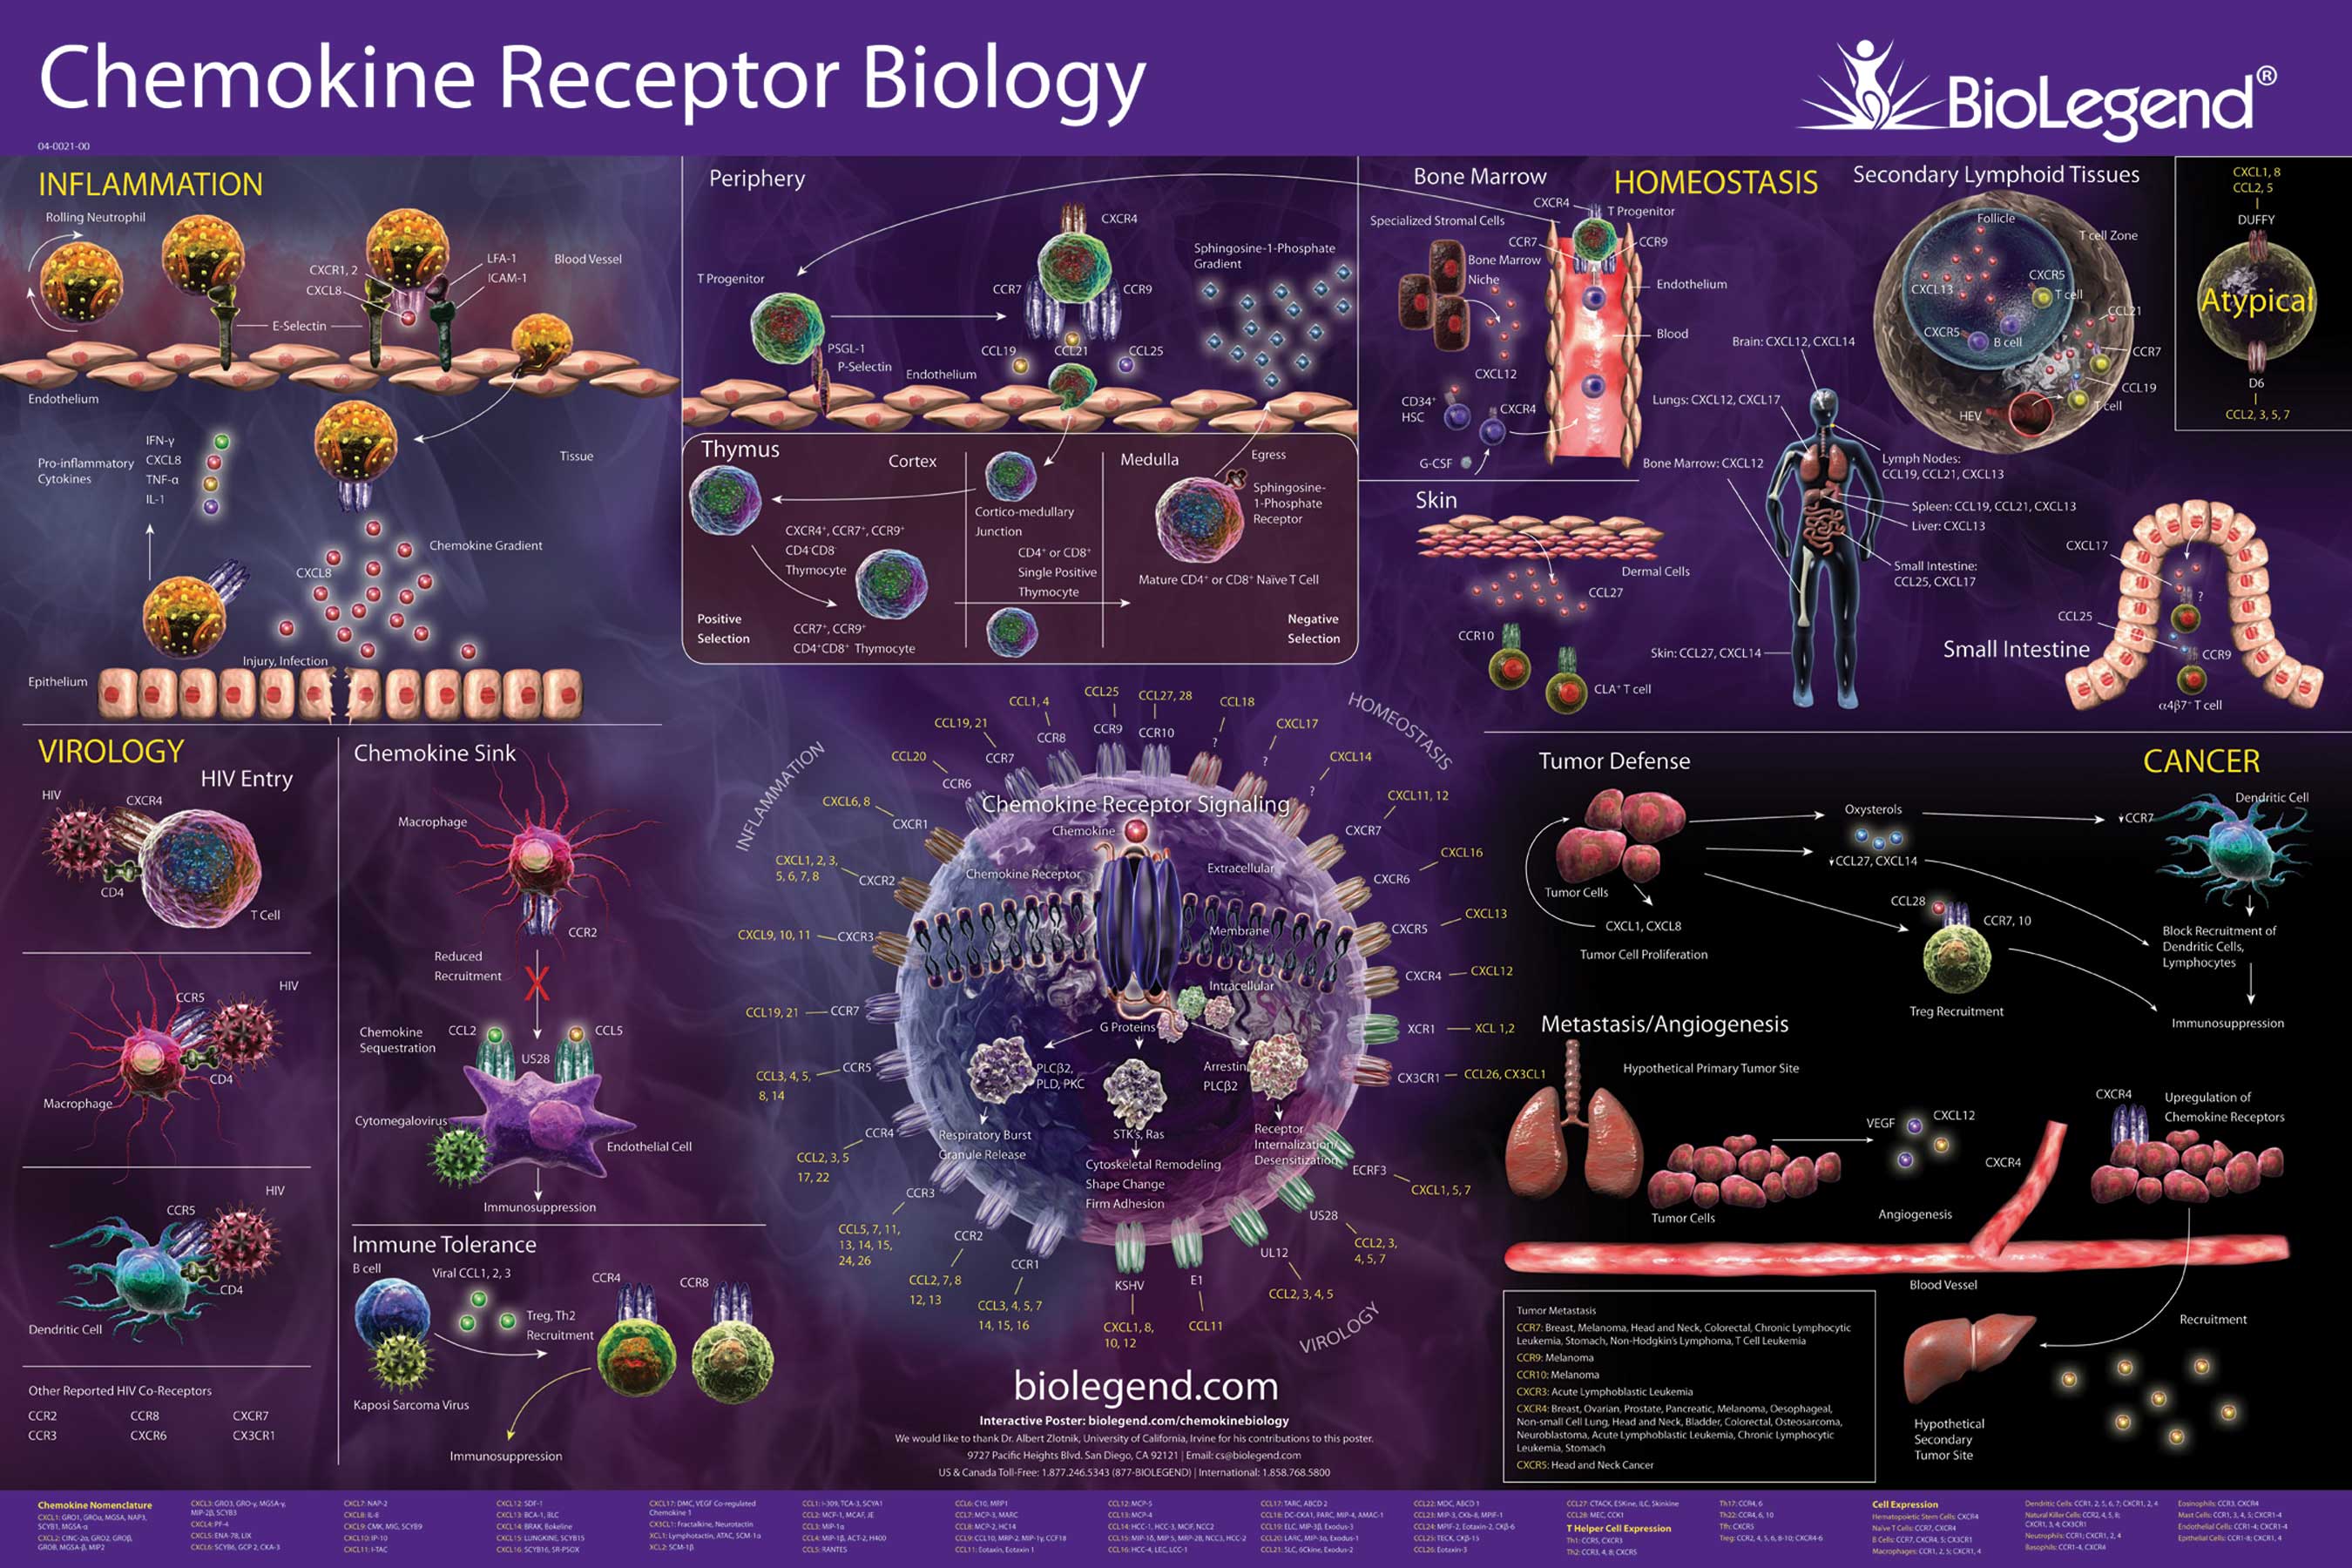 Chemokine Receptor Biology